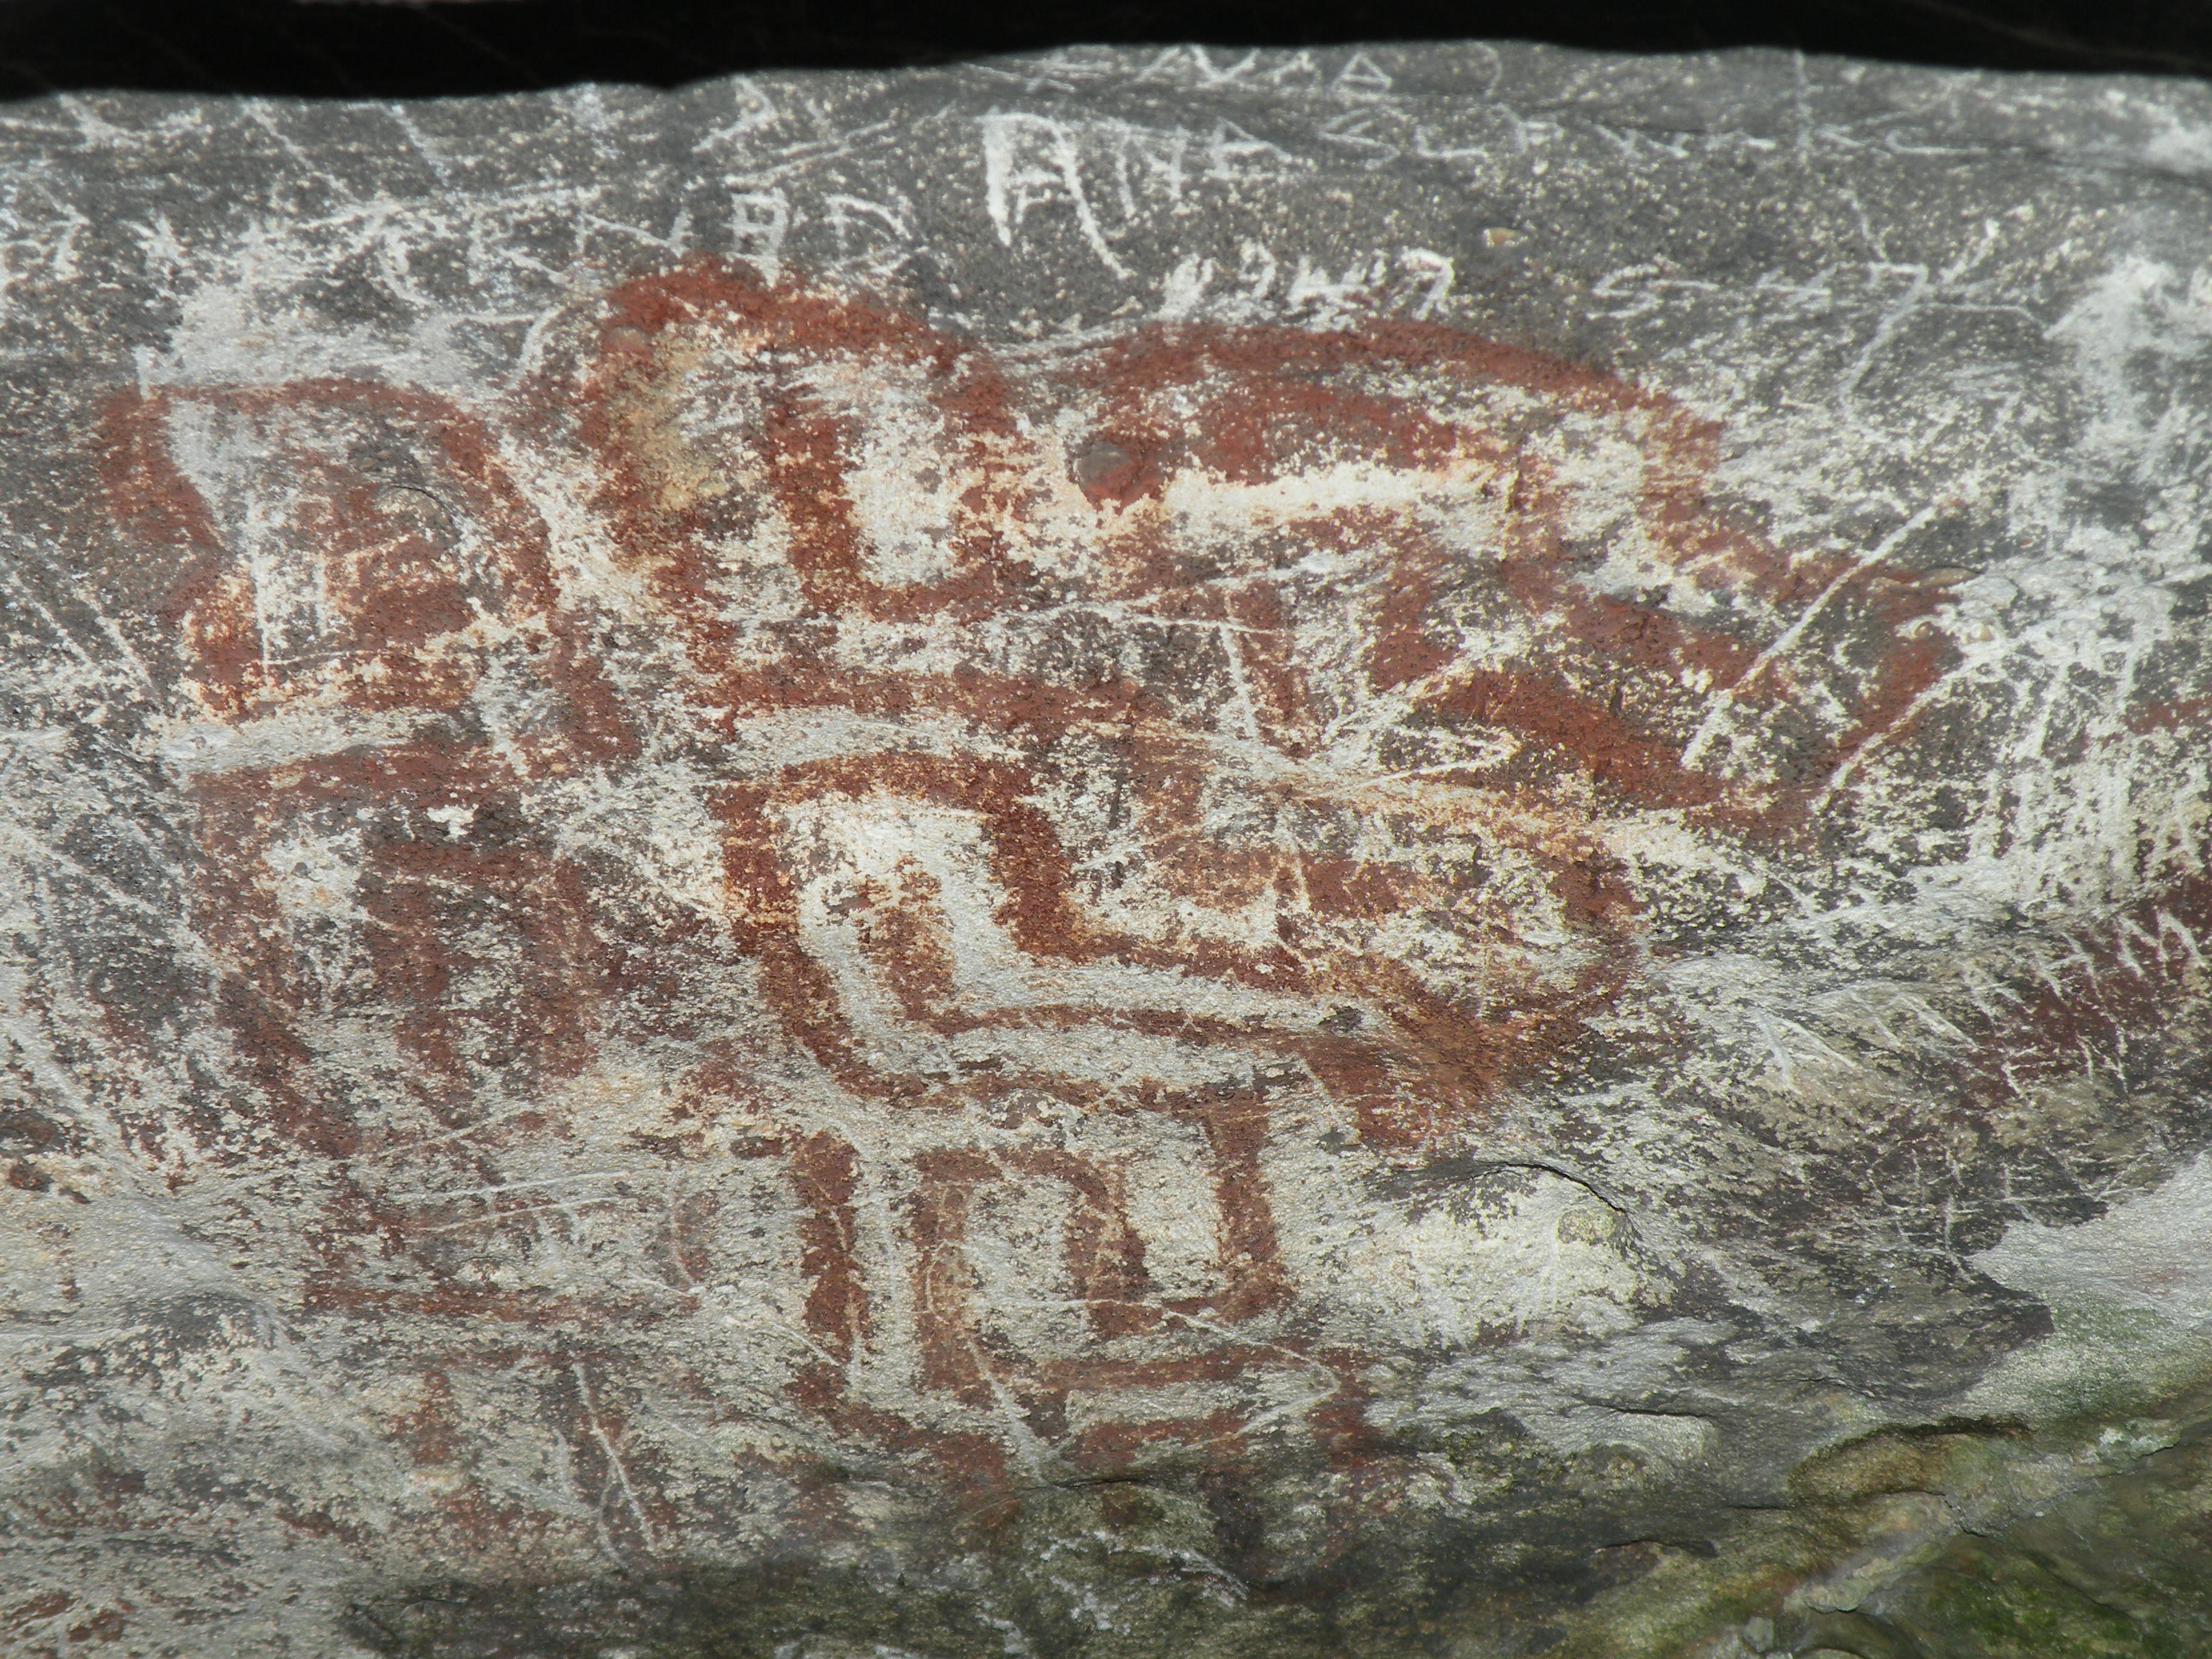 Decoding patterns in prehistoric cave art – Andrew Hiller